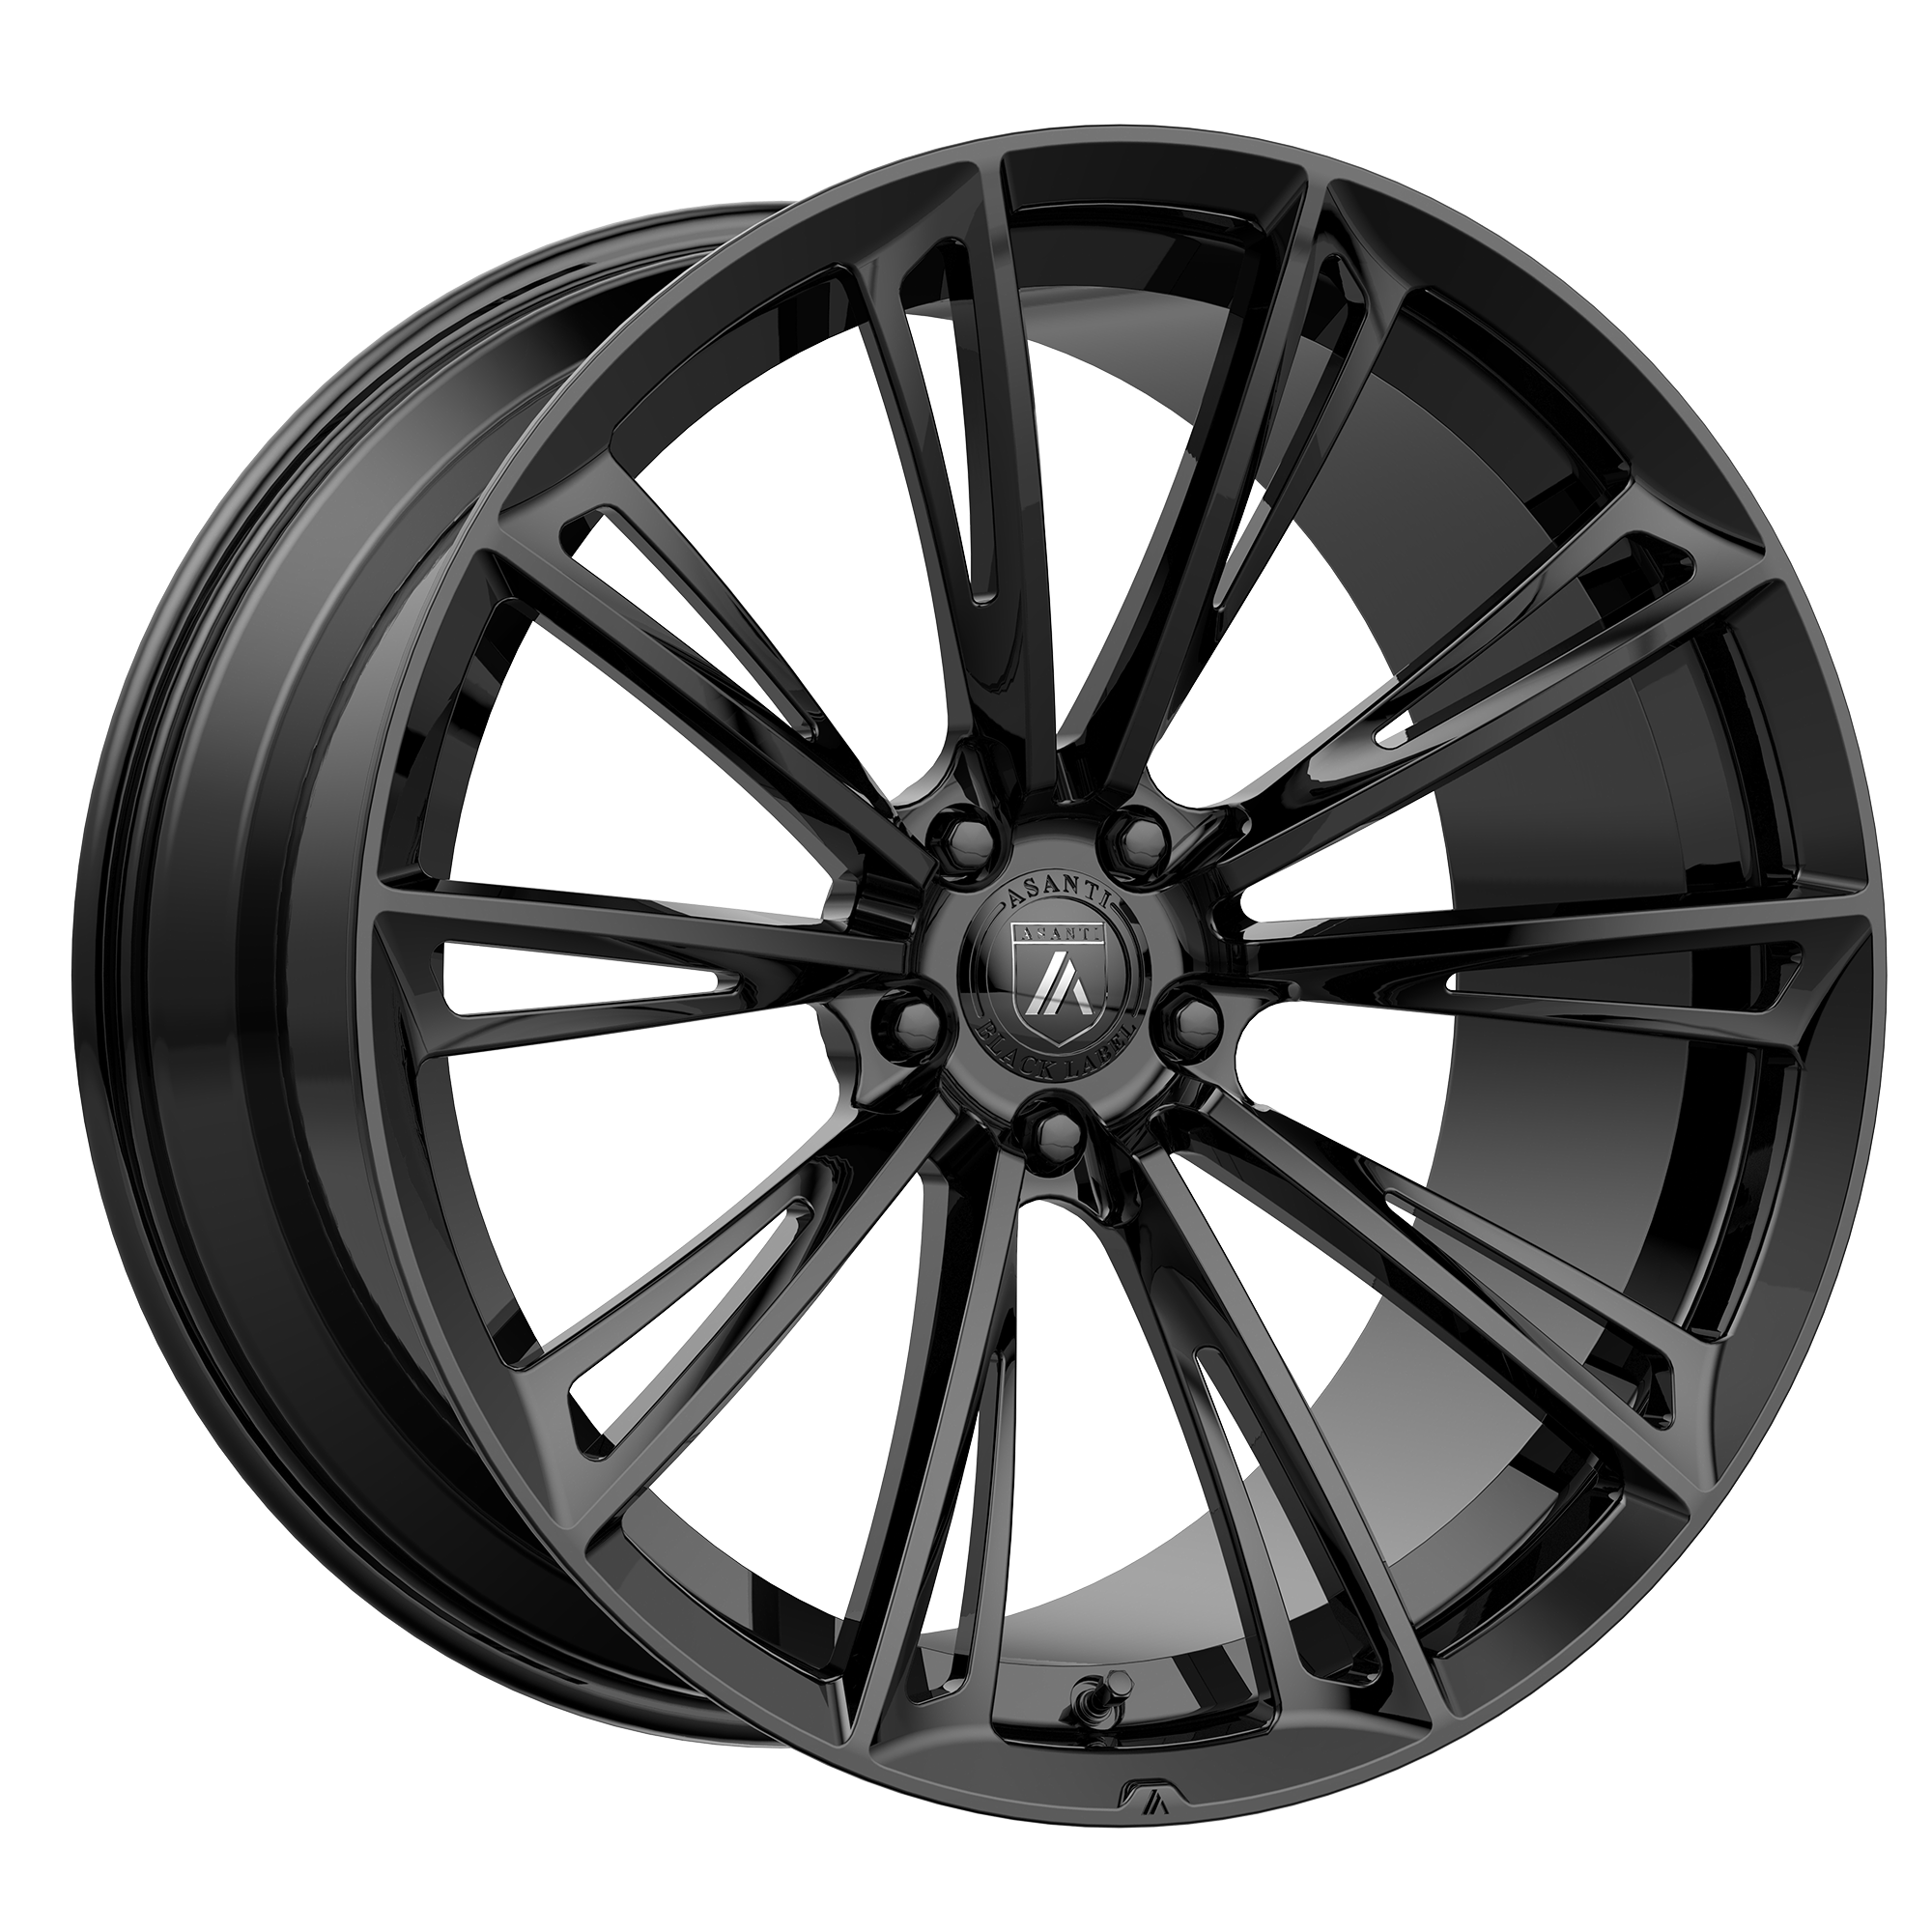 CORONA 22x9 5x114.30 GLOSS BLACK (32 mm) - Tires and Engine Performance